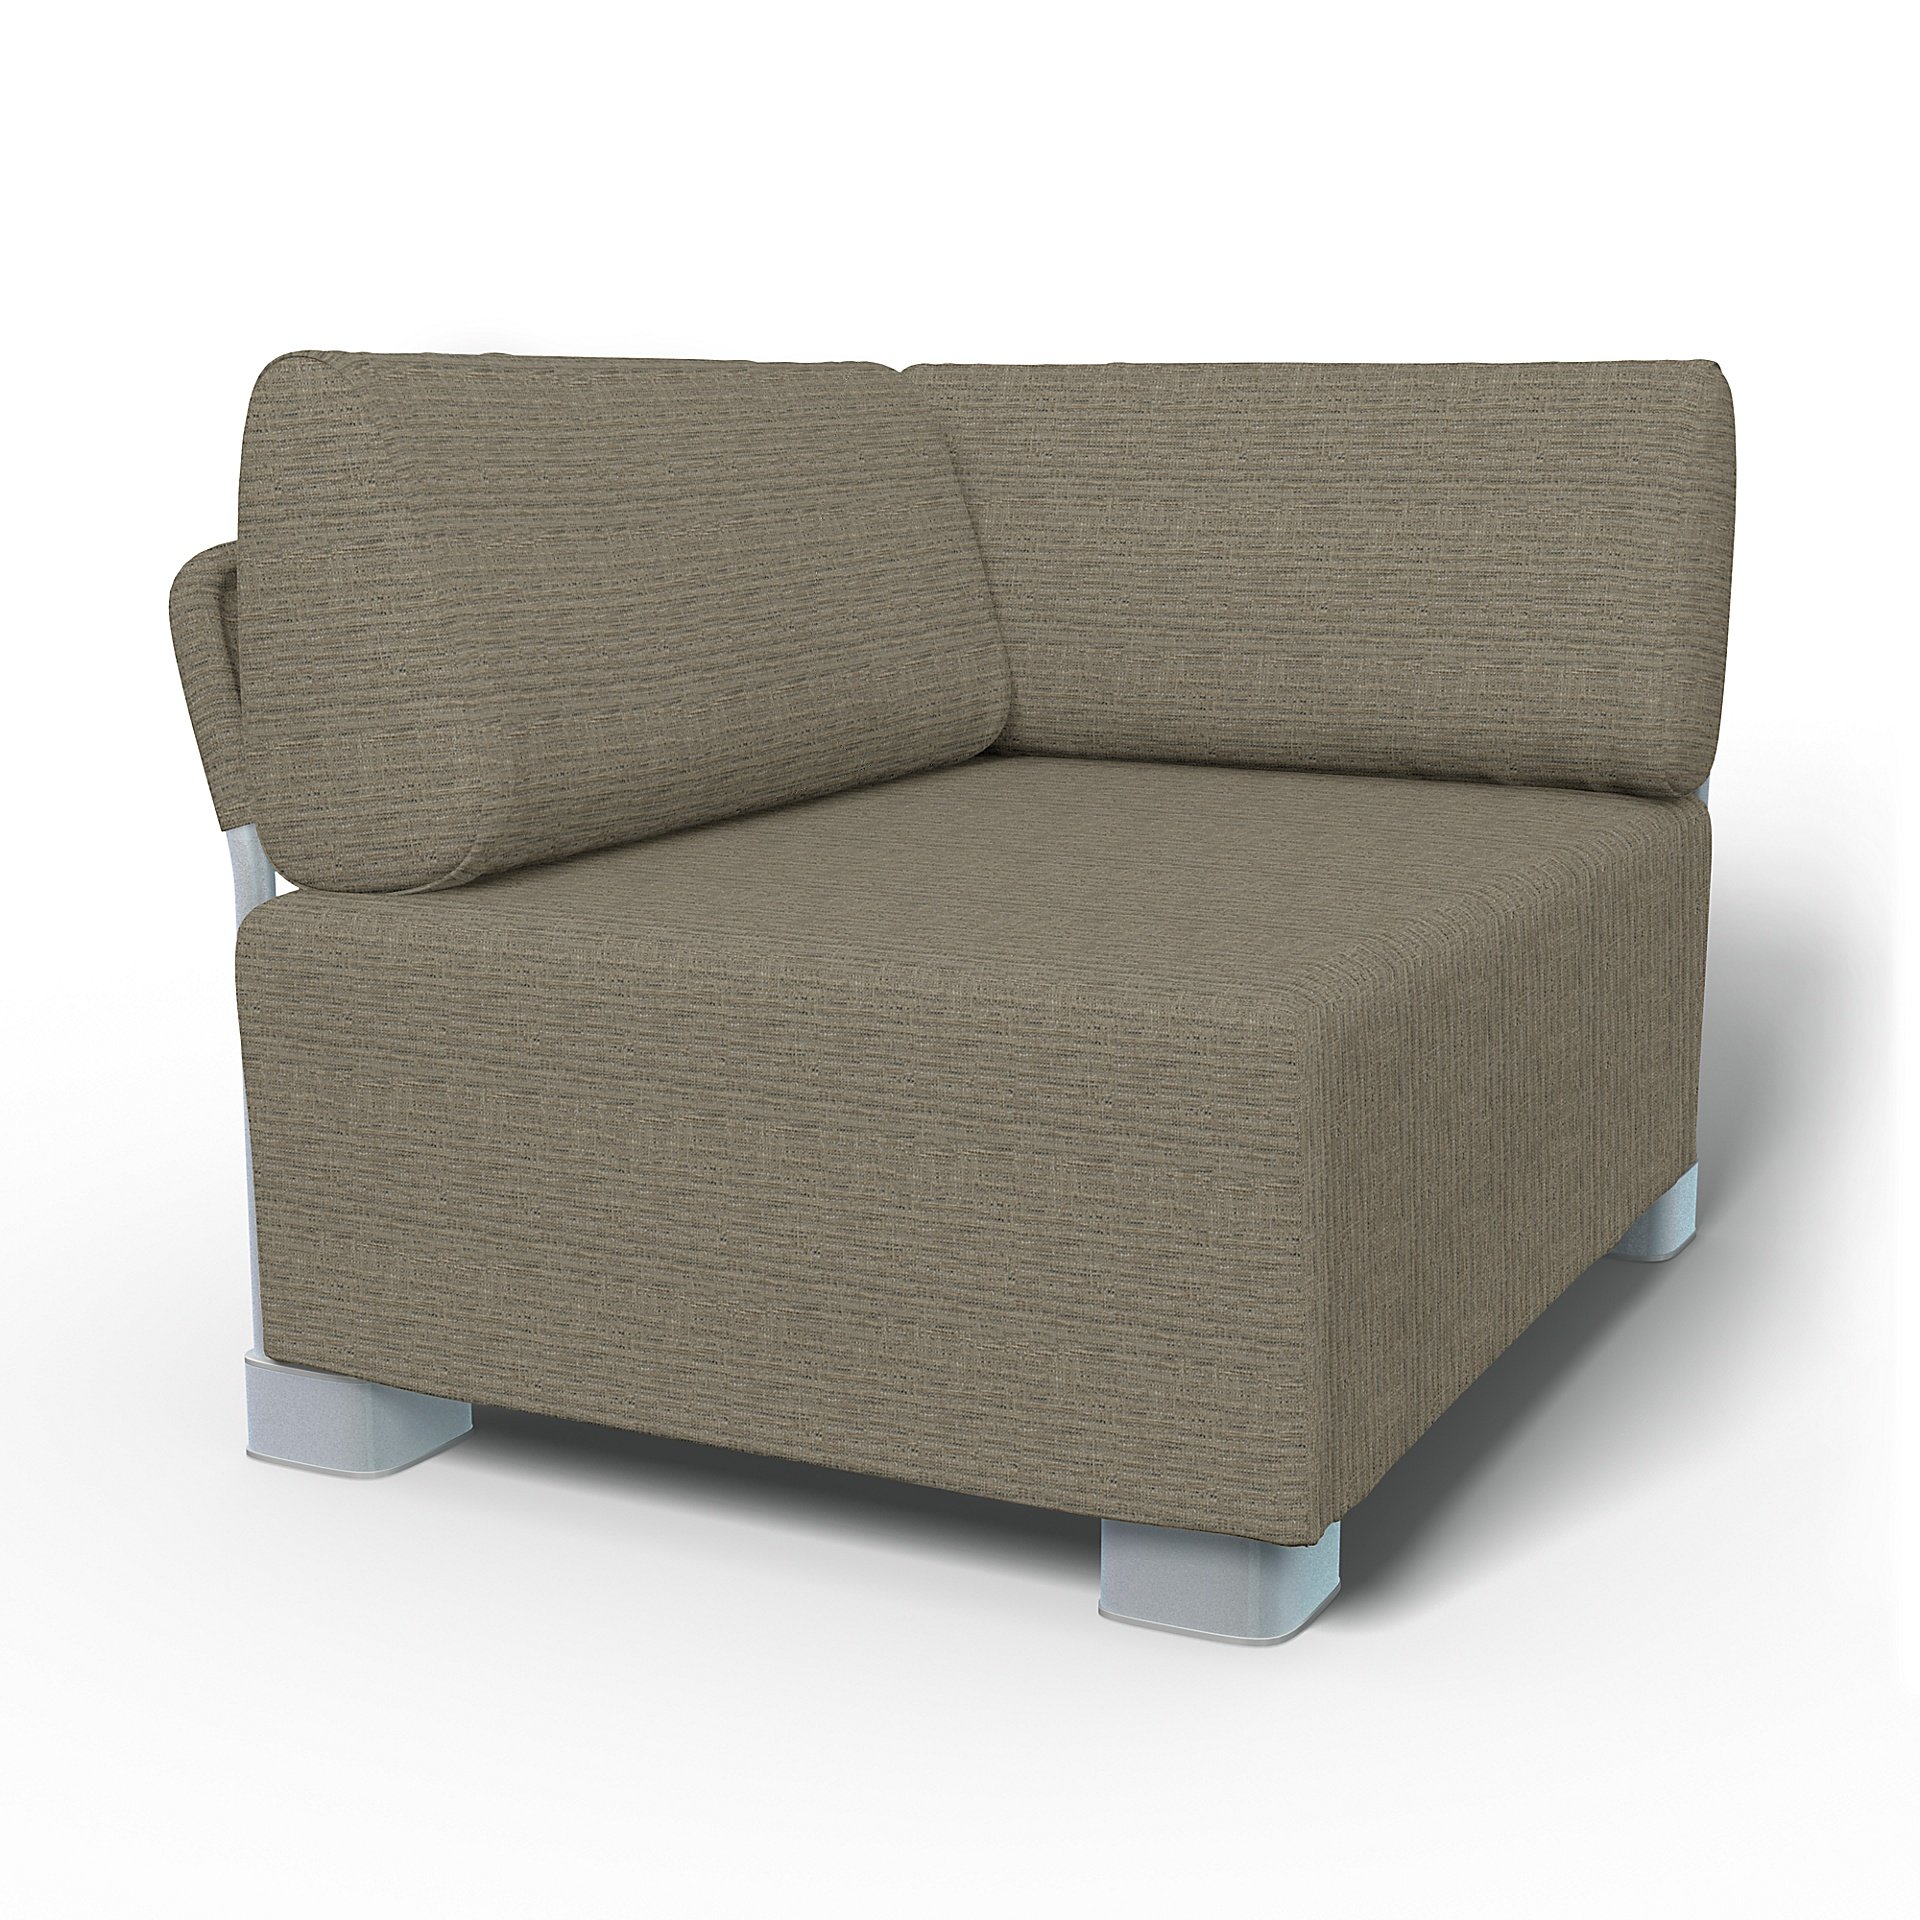 IKEA - Mysinge Corner Module Sofa Cover, Mole Brown, Boucle & Texture - Bemz